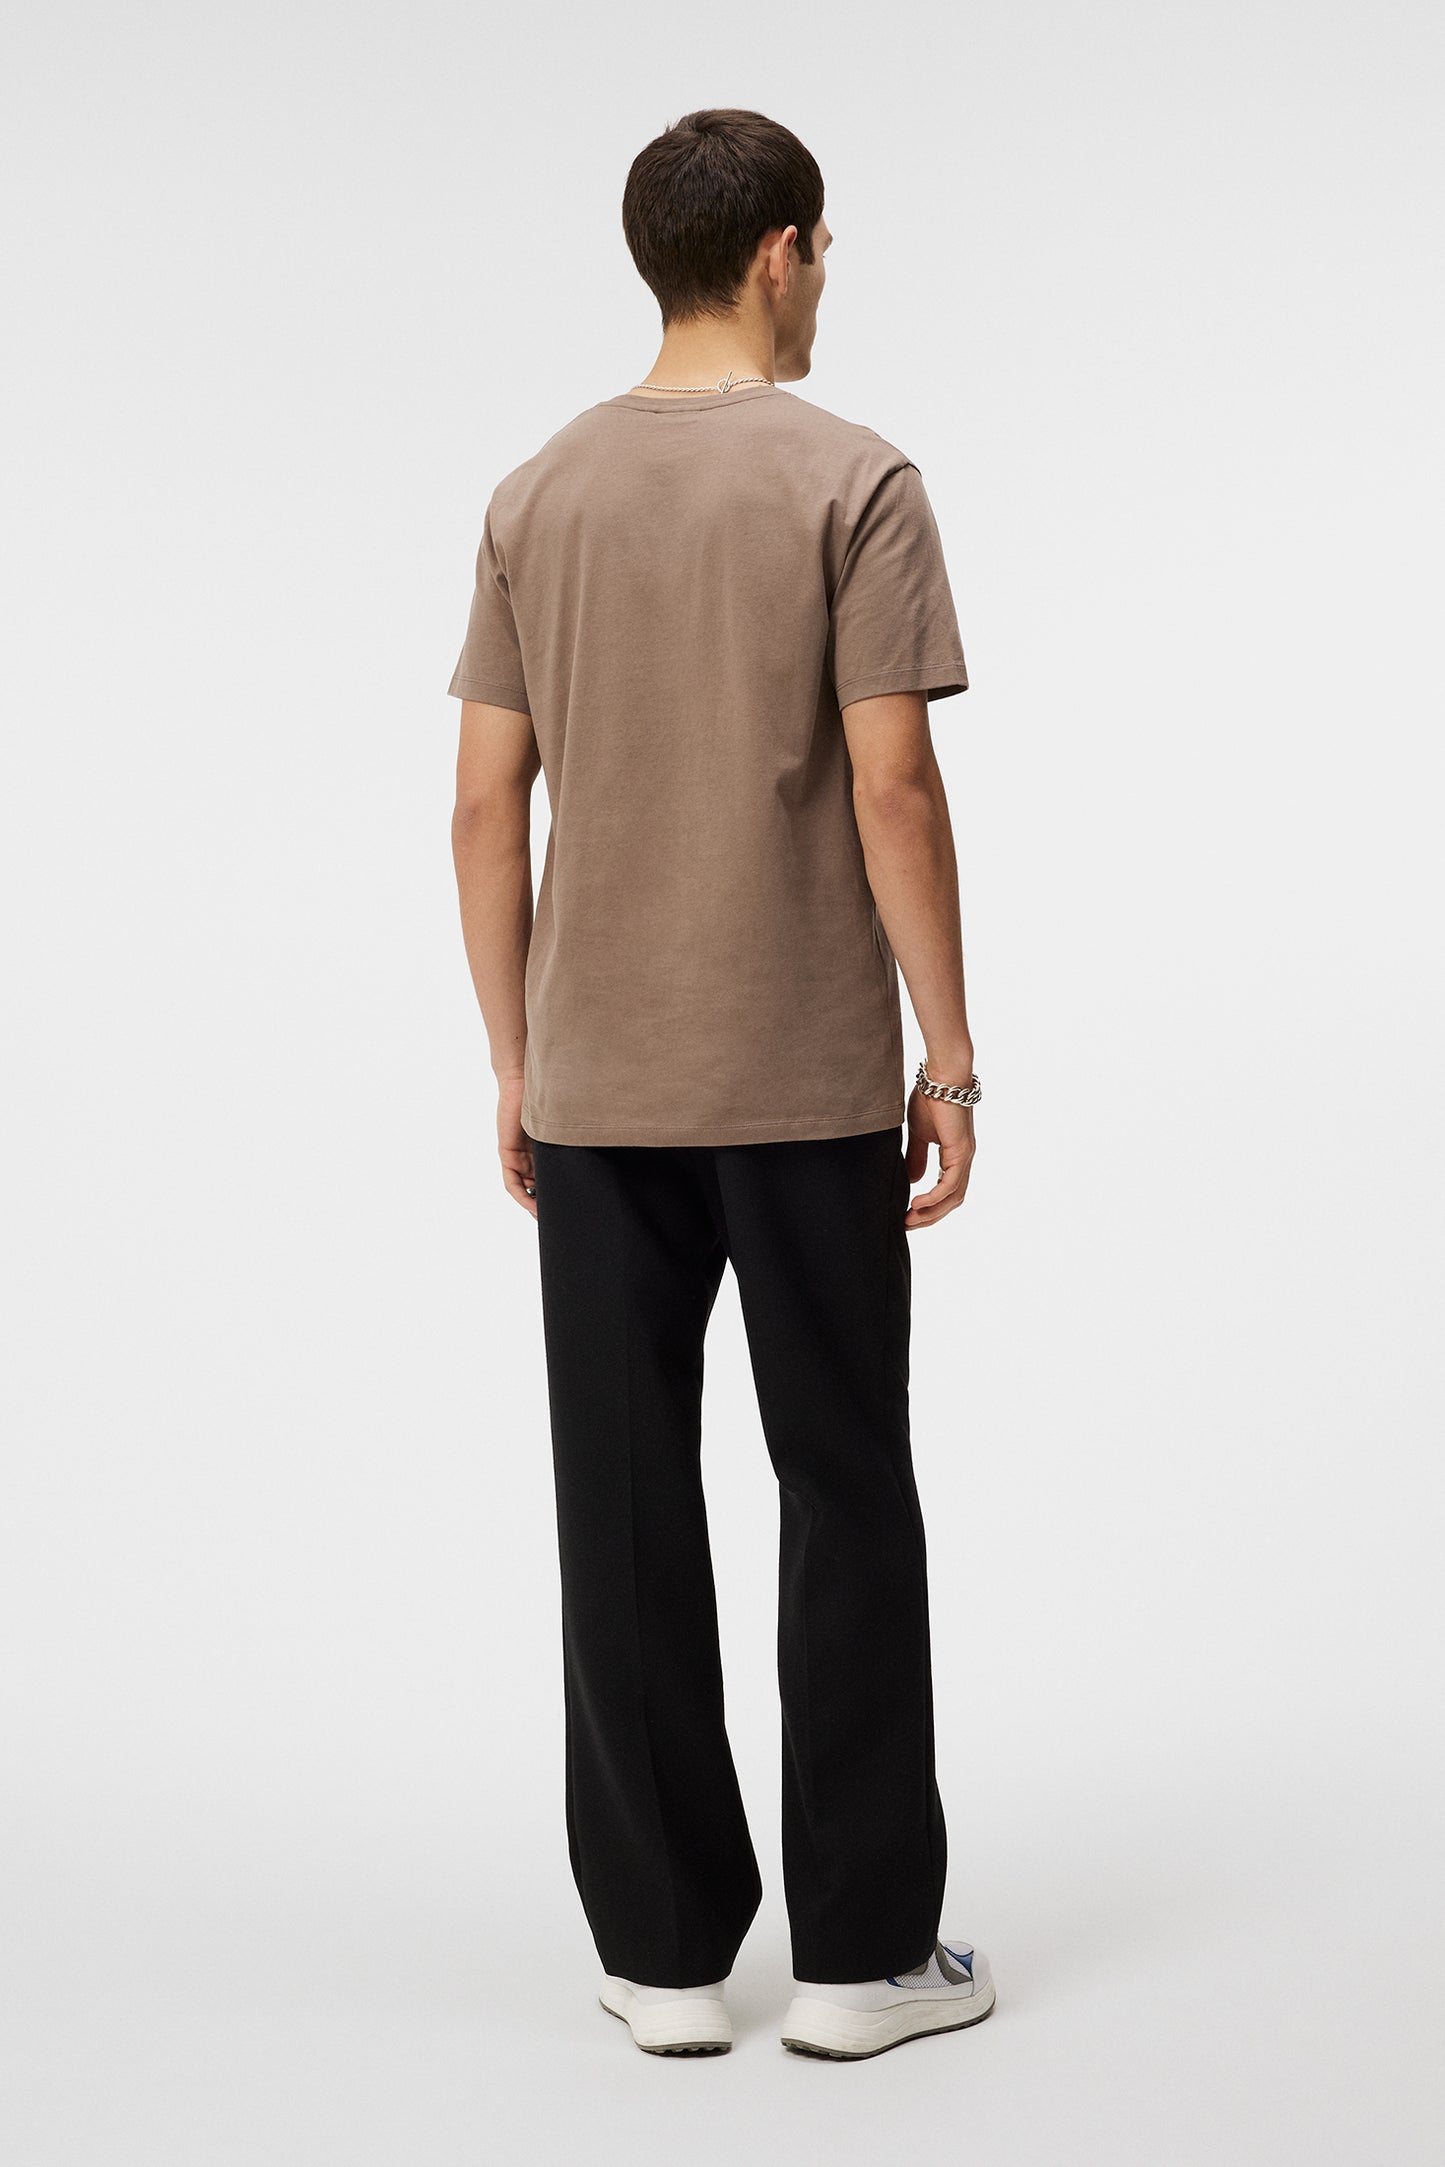 Sid Basic T-Shirt / Walnut